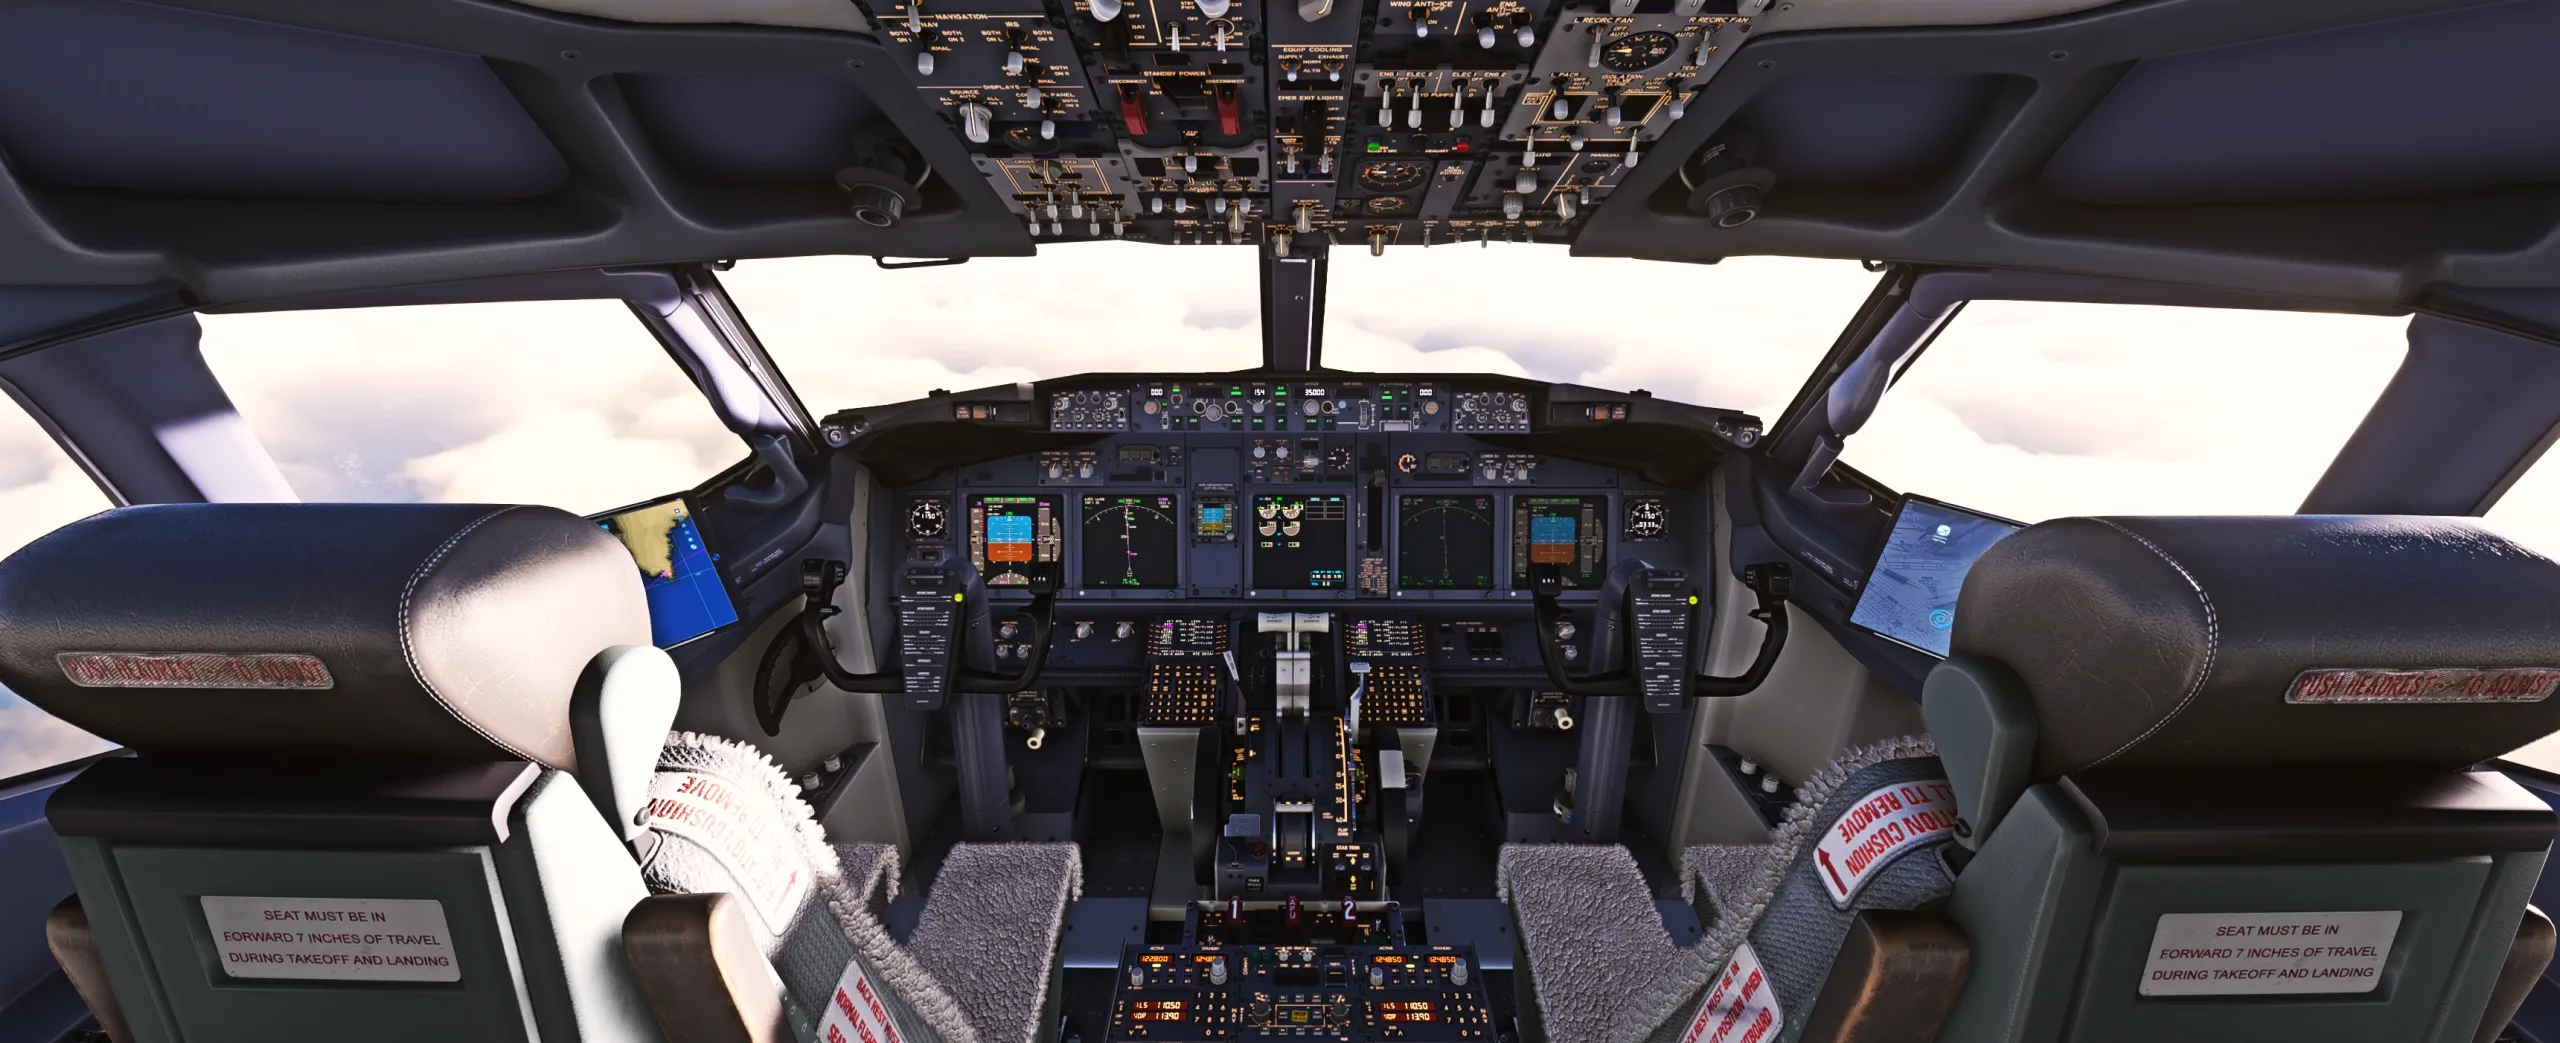 euroSKIES virtual airline Boeing cockpit of member flying above clouds